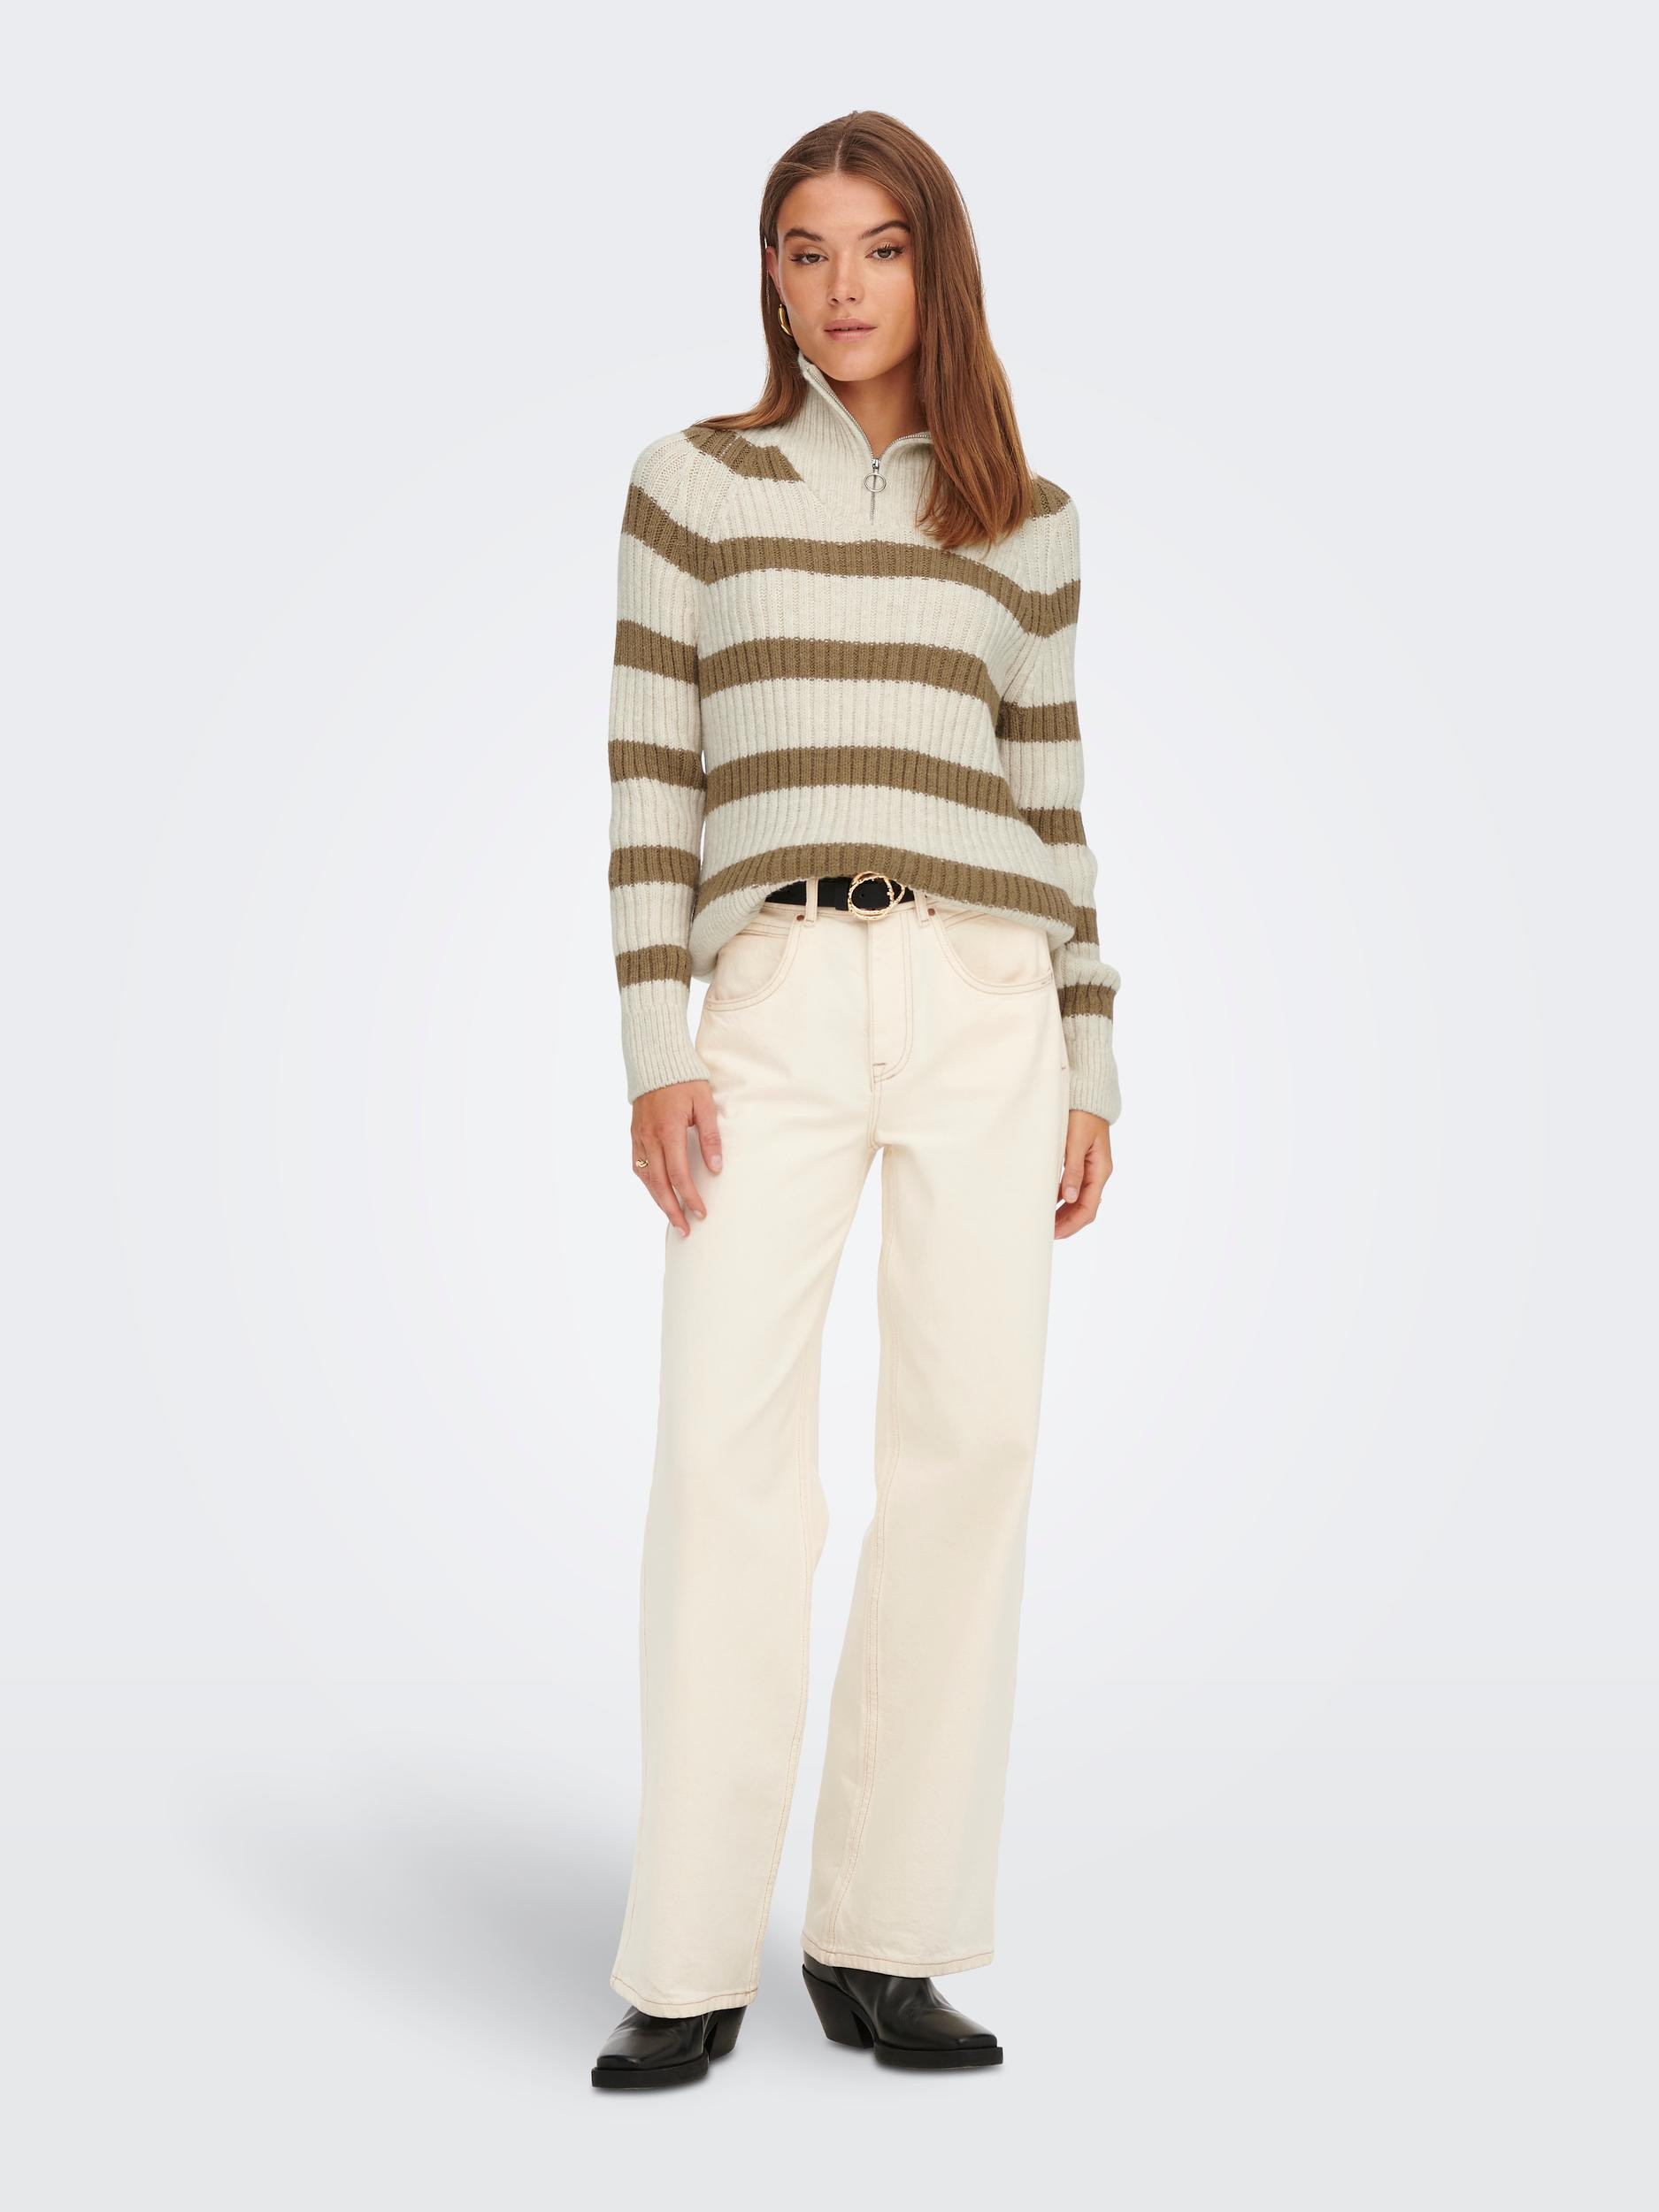 Only - Striped half-zip pullover, Beige, large image number 2